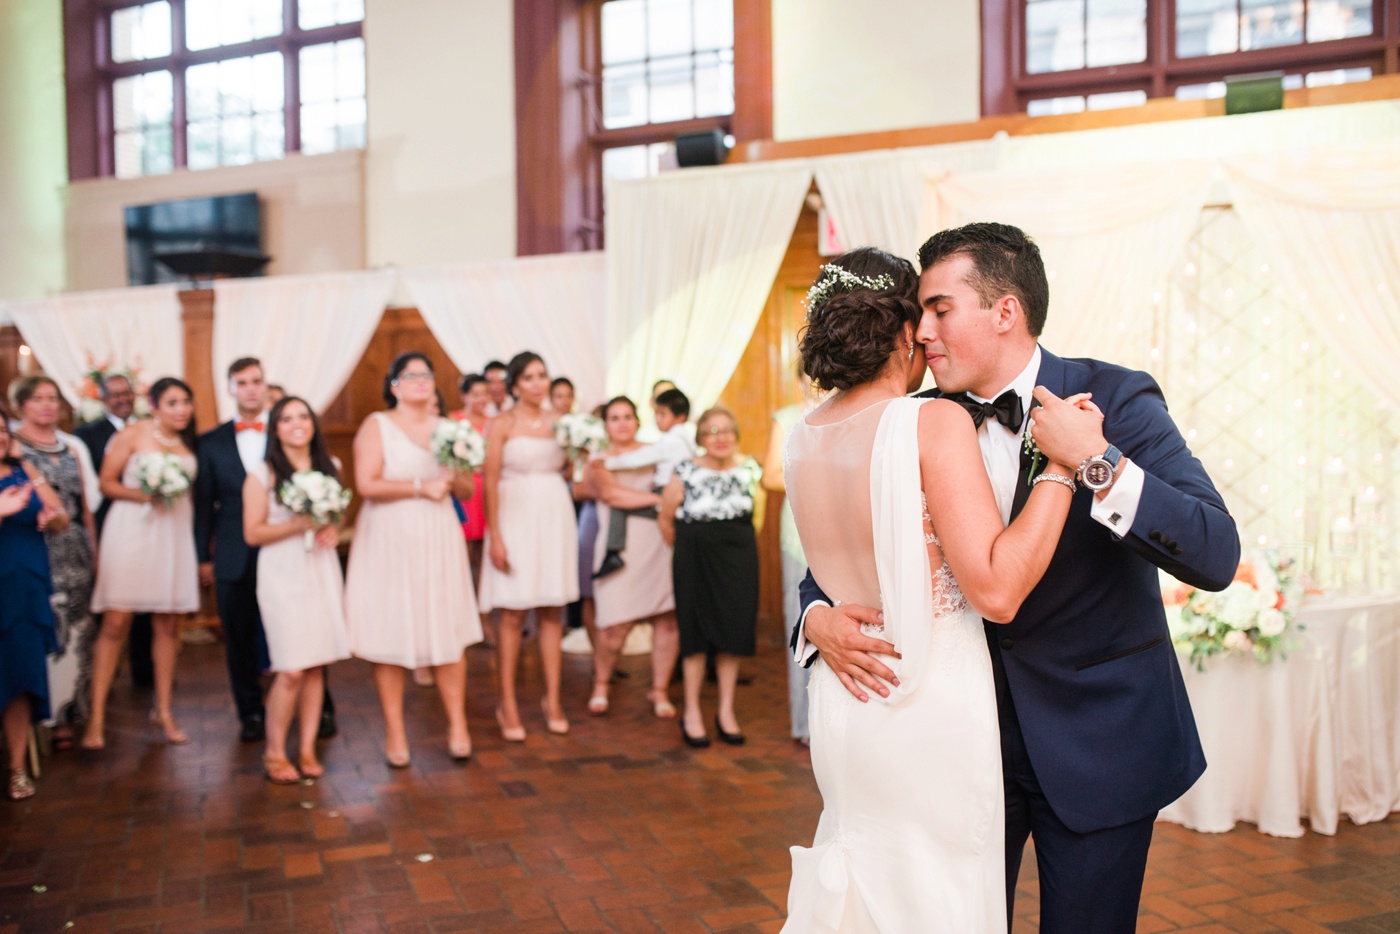 106 - Daniela + Franco - Celebrate at Snug Harbor Wedding - Staten Island New York Wedding Photographer - Alison Dunn Photography photo